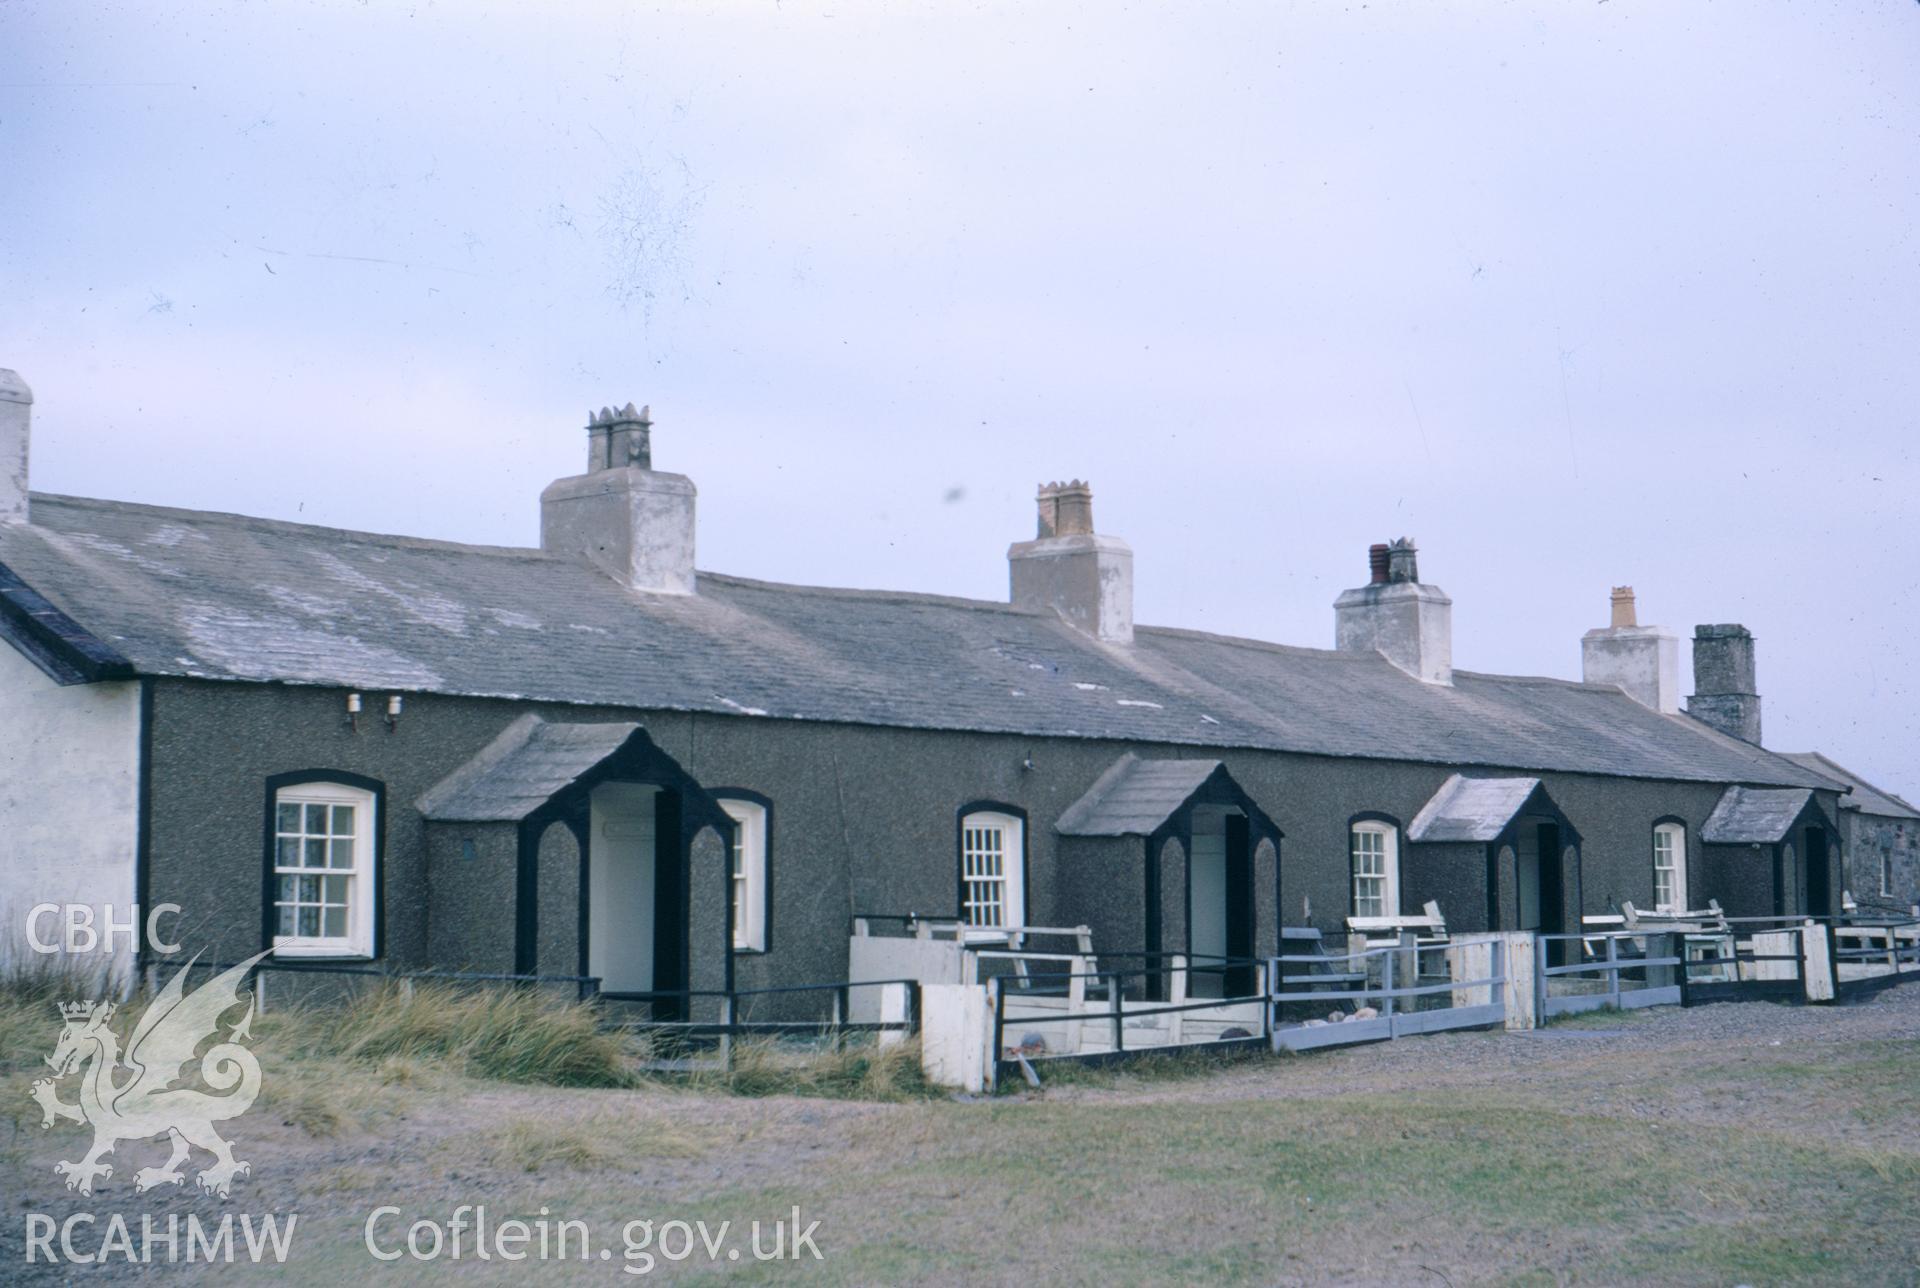 Colour slide showing Pilots Houses on Llanddwyn Island.